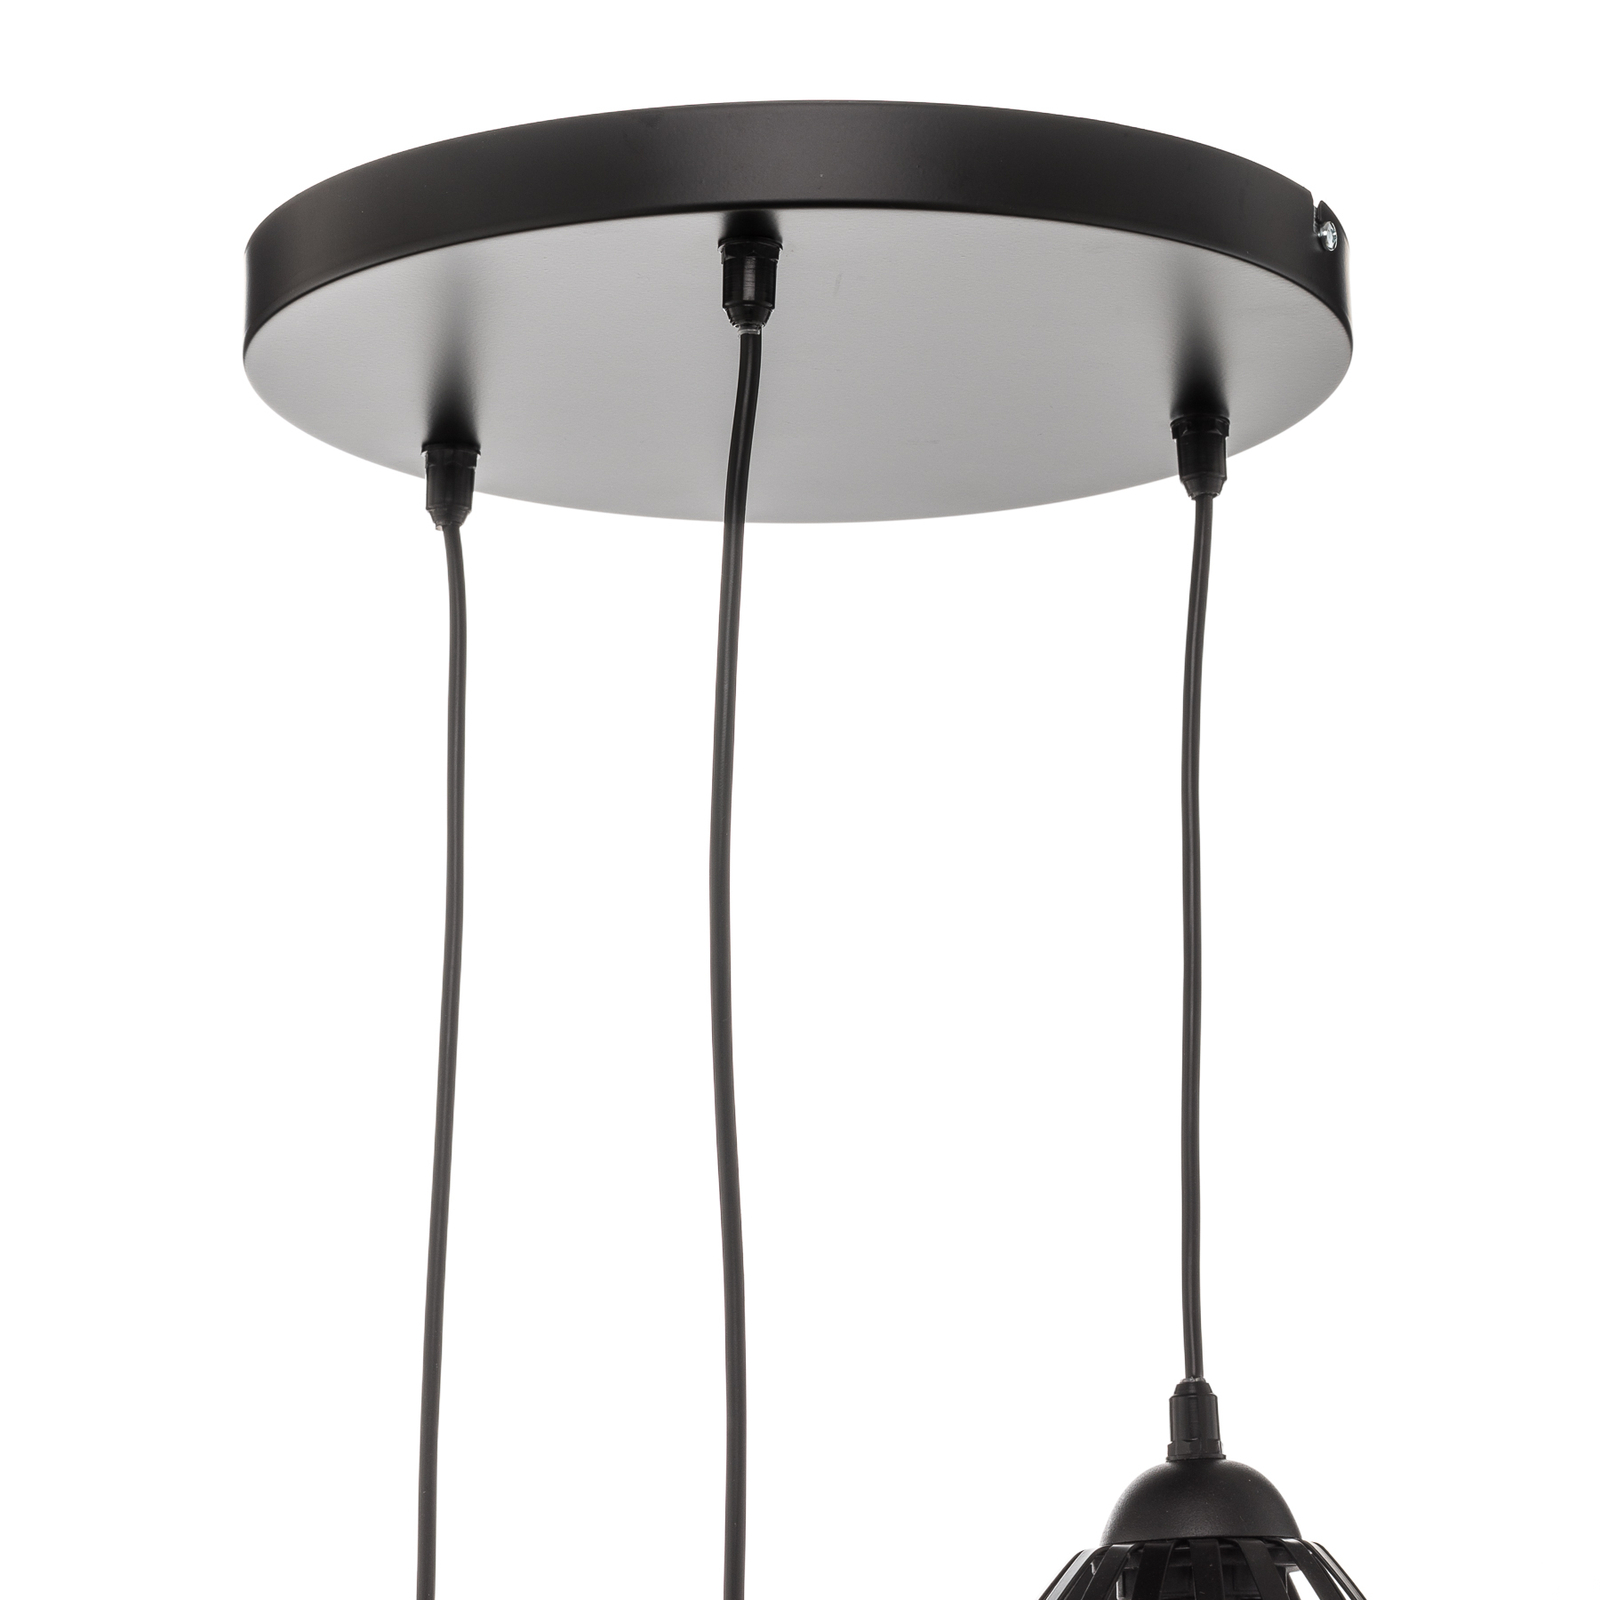 Dali hanglamp in zwart, 3-lamps rond